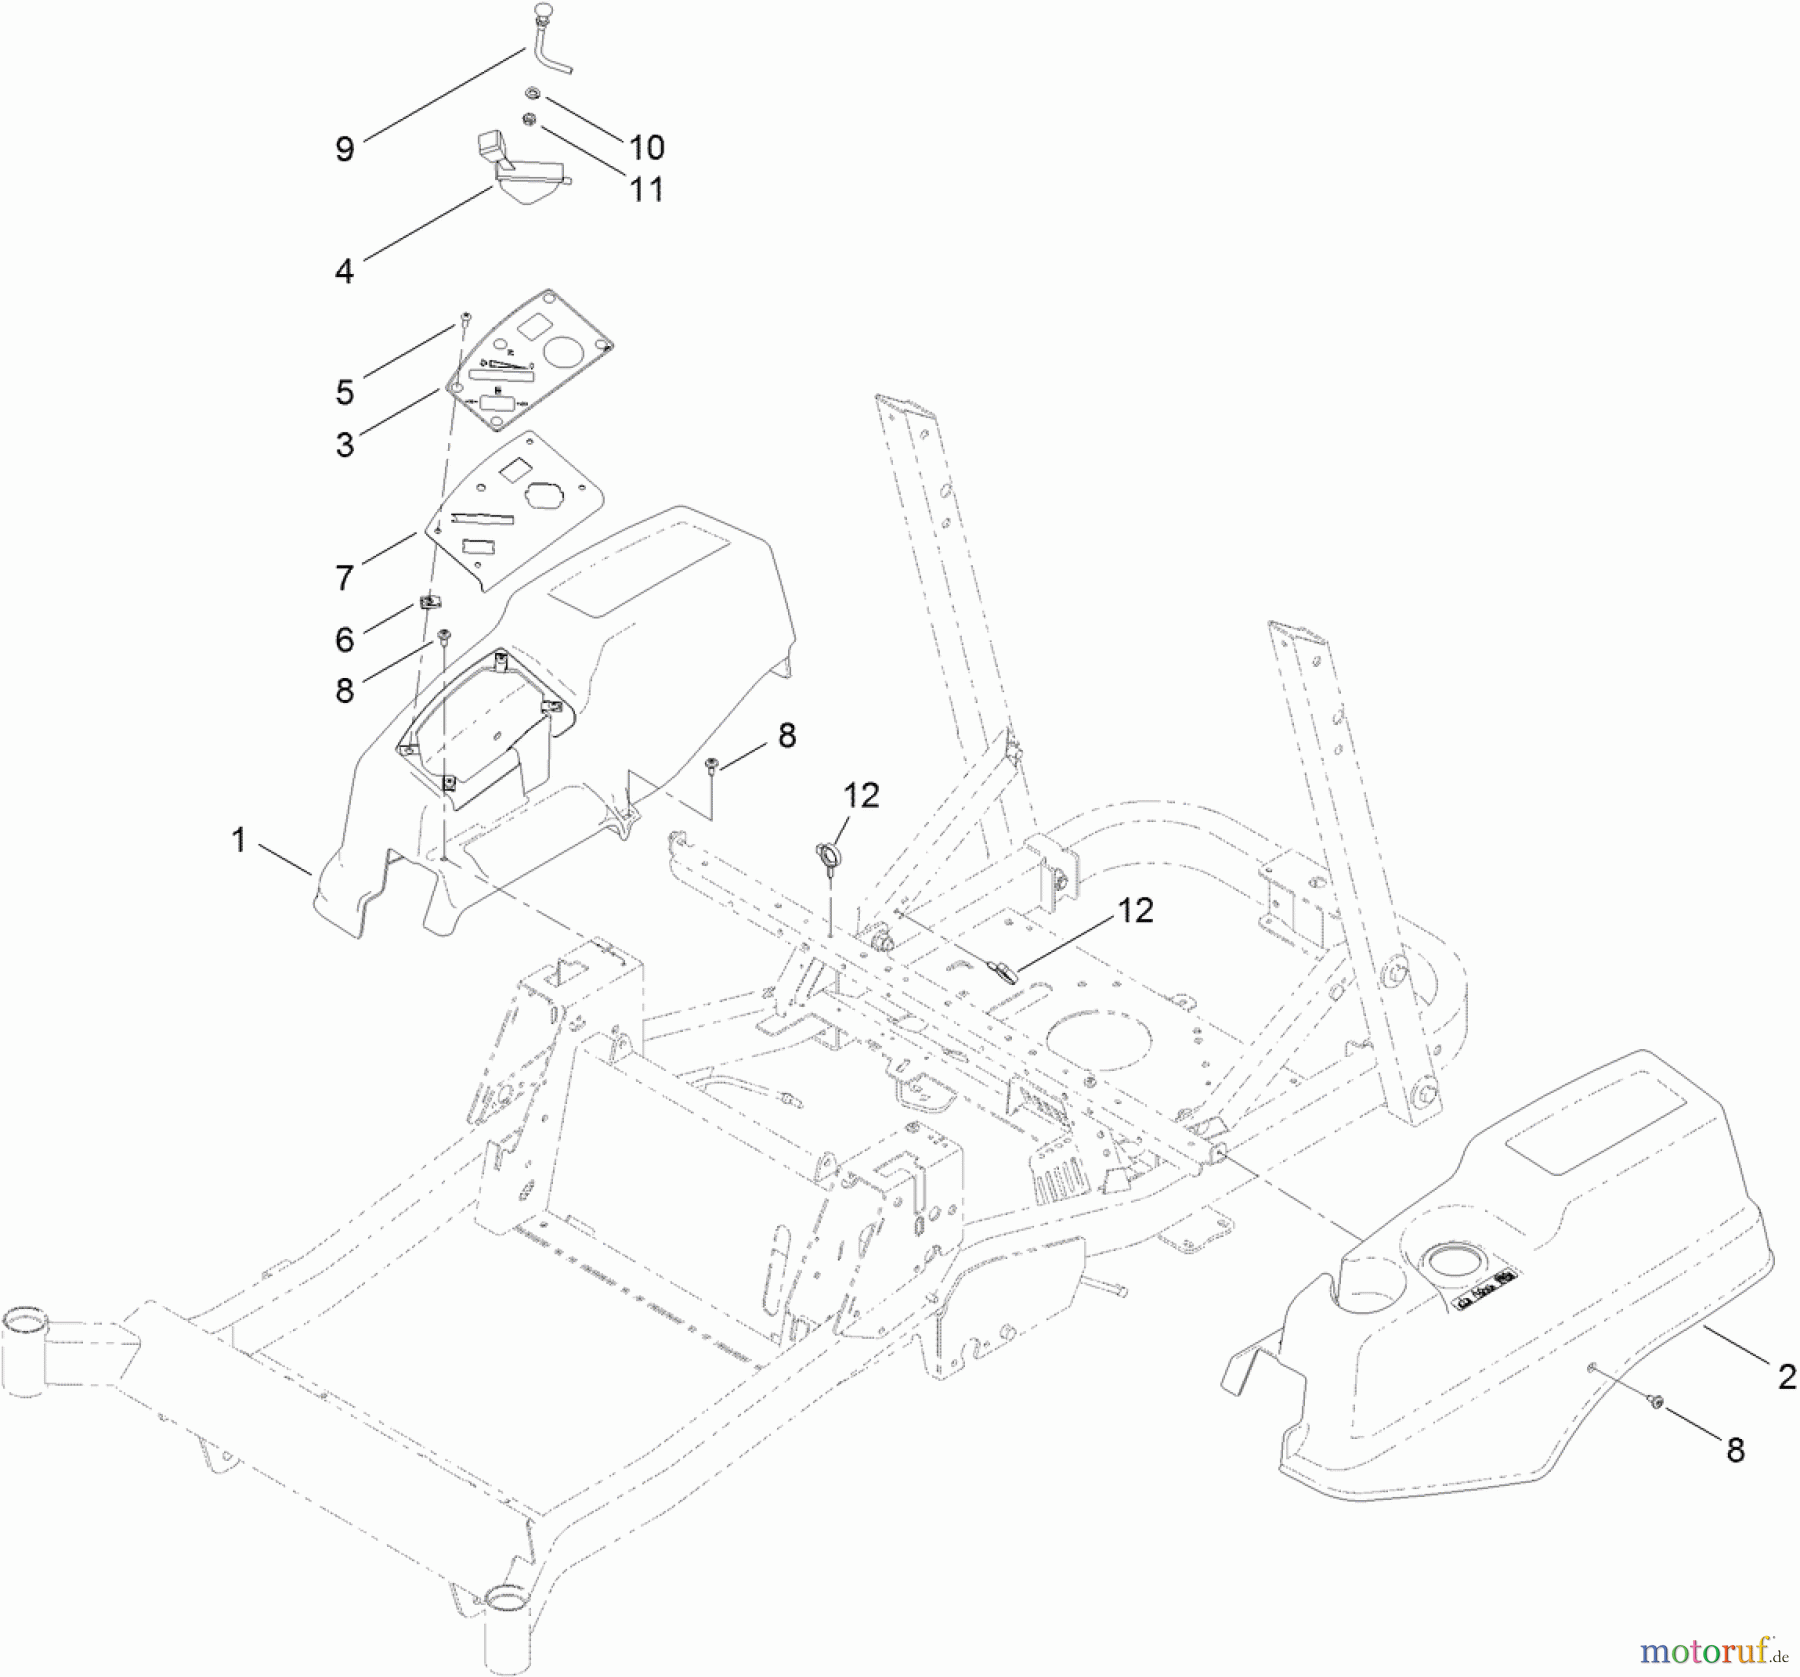  Toro Neu Mowers, Zero-Turn 74842 (ZX5420) - Toro TITAN ZX5420 Zero-Turn-Radius Riding Mower, 2011 (311000001-311999999) CONTROL PANEL AND BODY STYLING POD ASSEMBLY